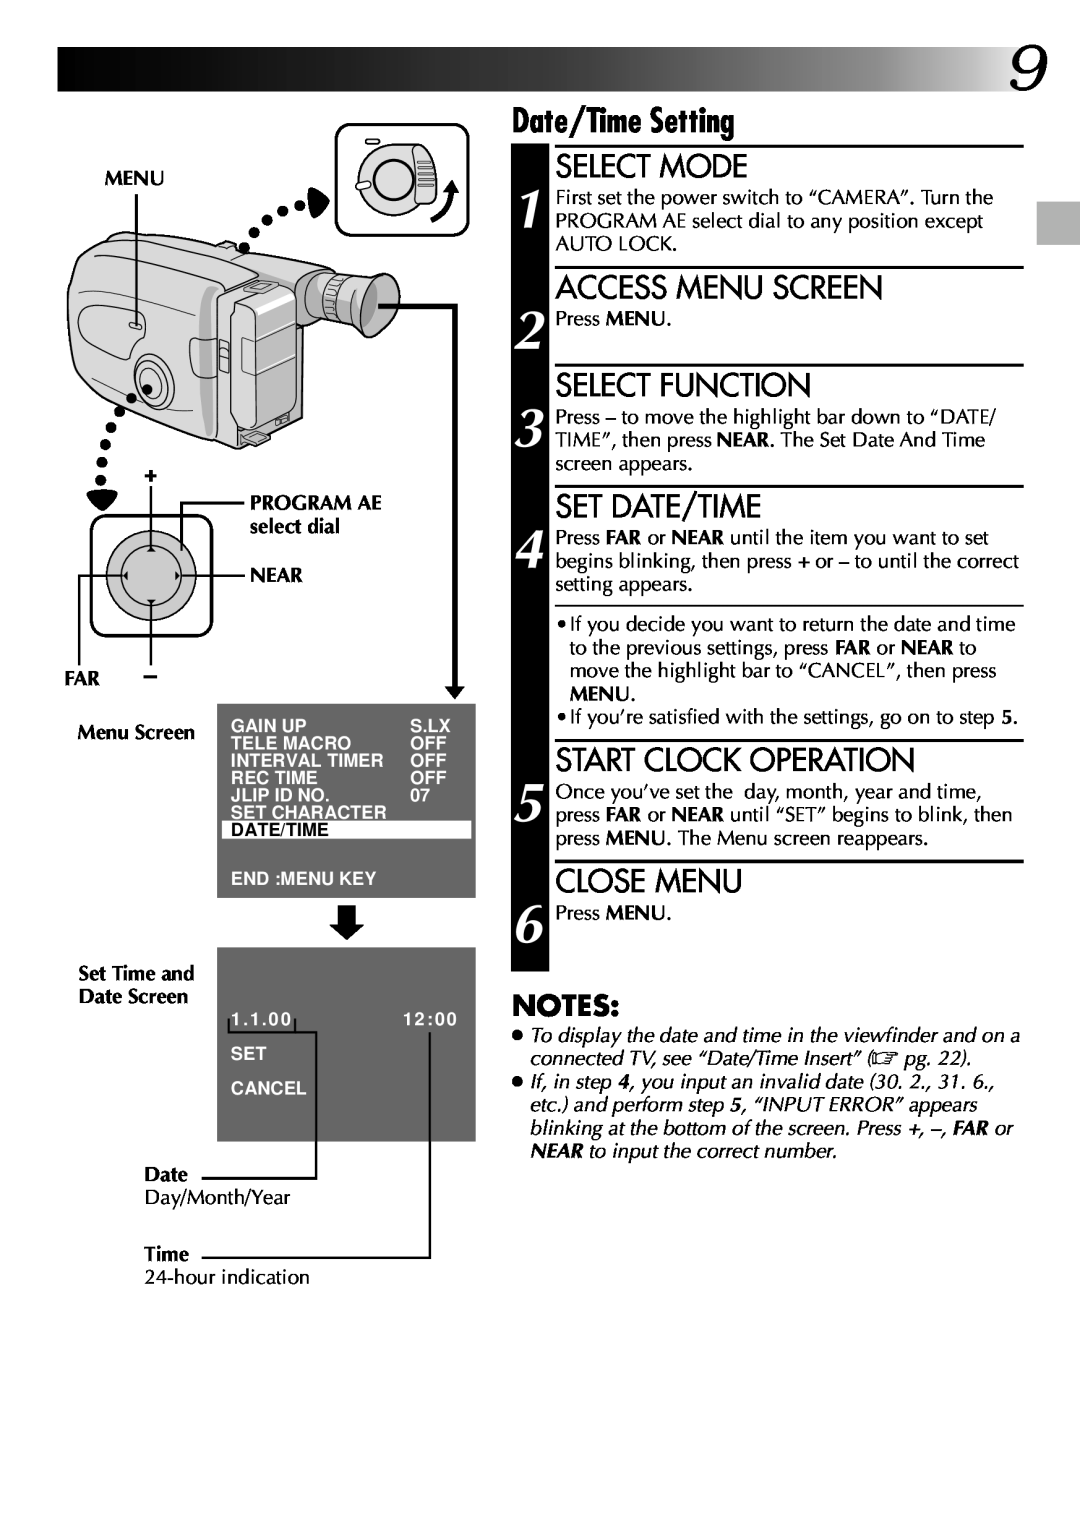 JVC GR-AX270 Start Clock Operation, Close Menu, FAR Menu Screen, PROGRAM AE select dial NEAR, Set Time and Date Screen 